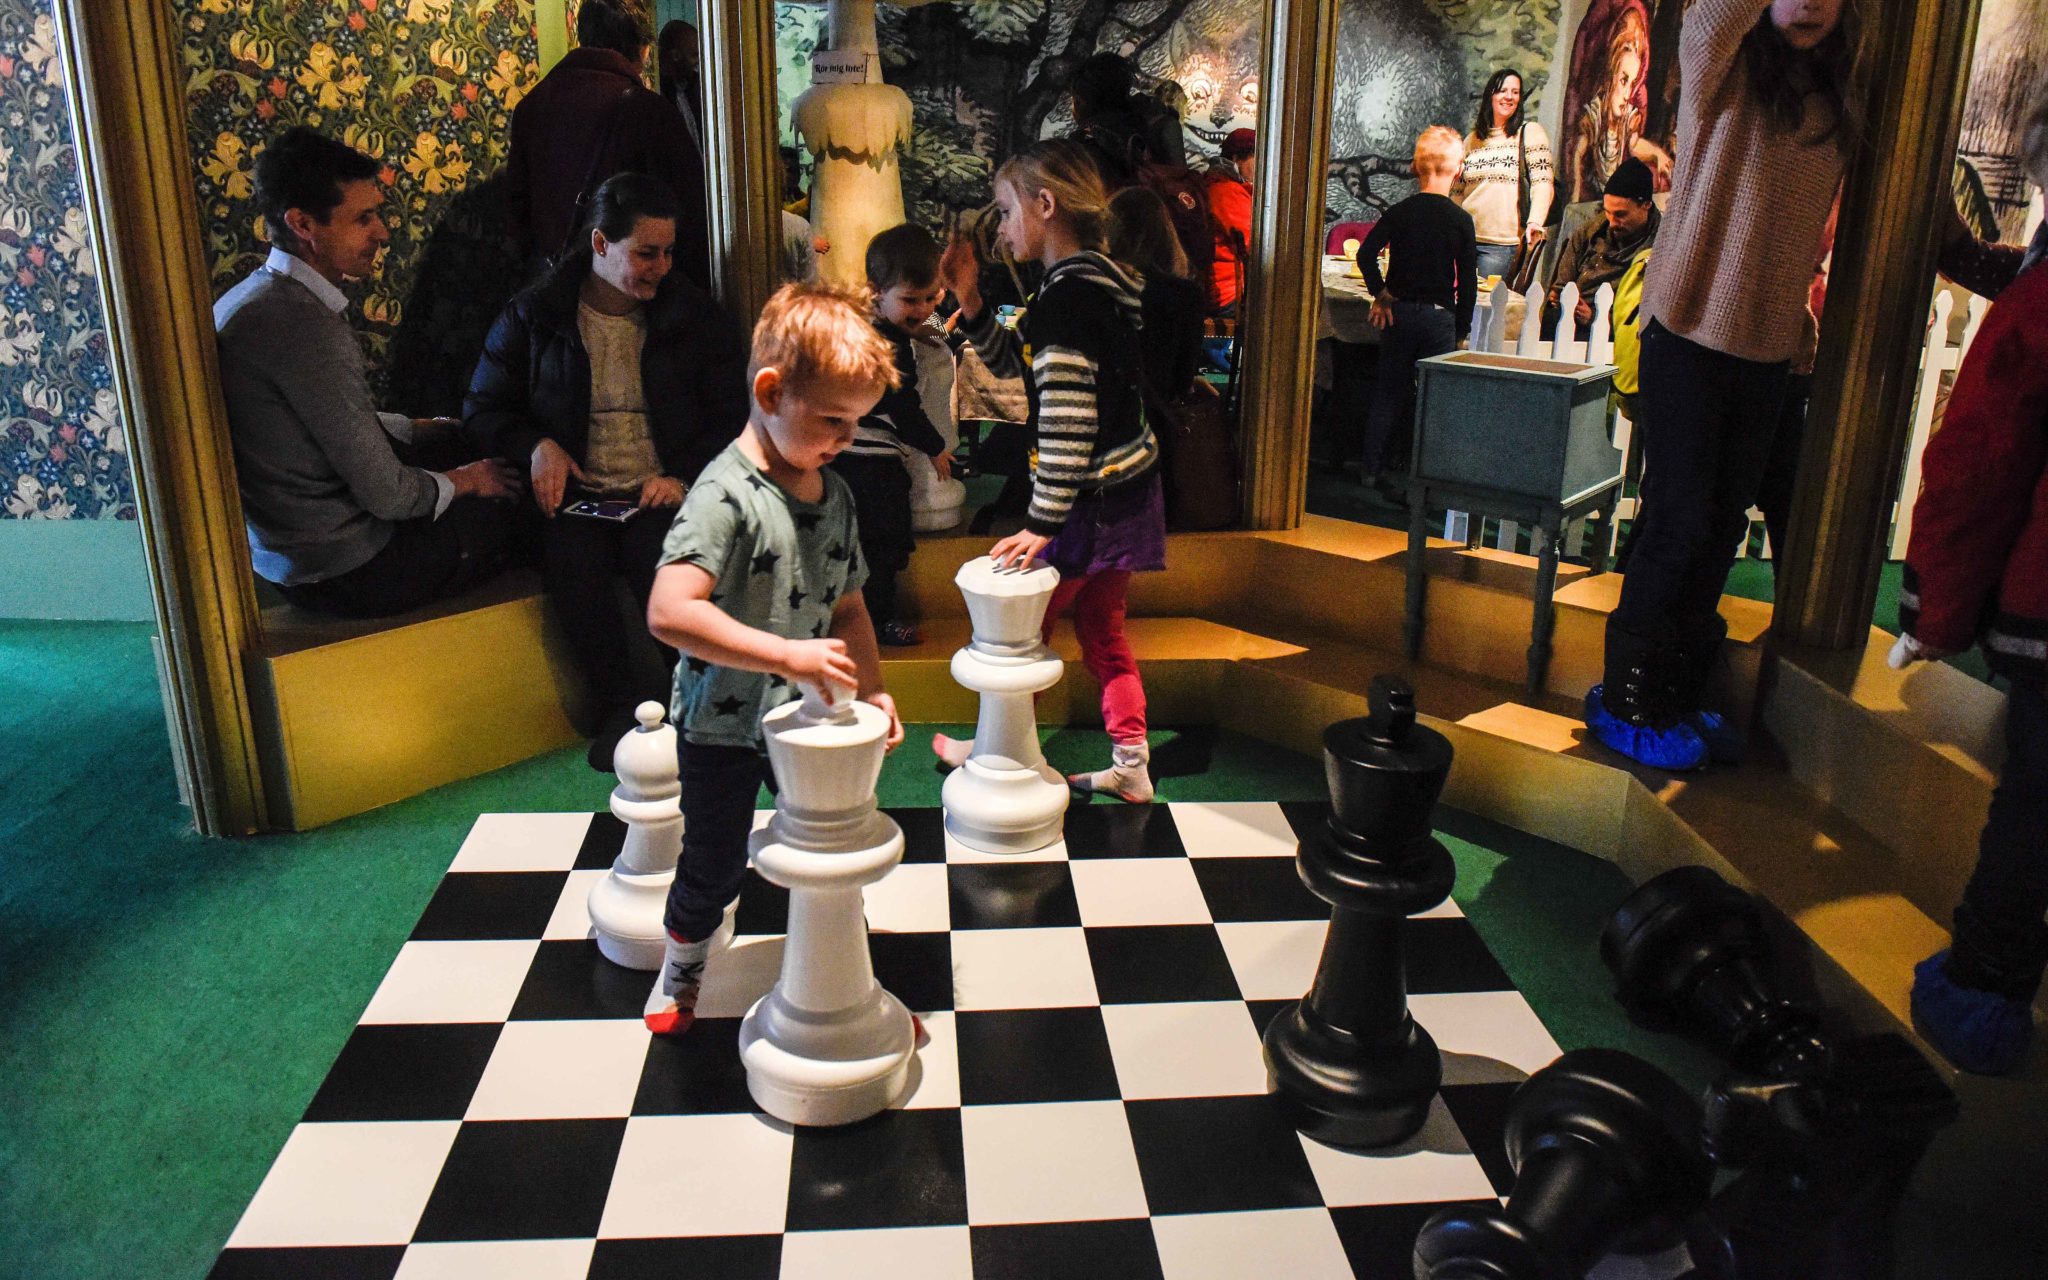 barn leker på ett stort schackbräde